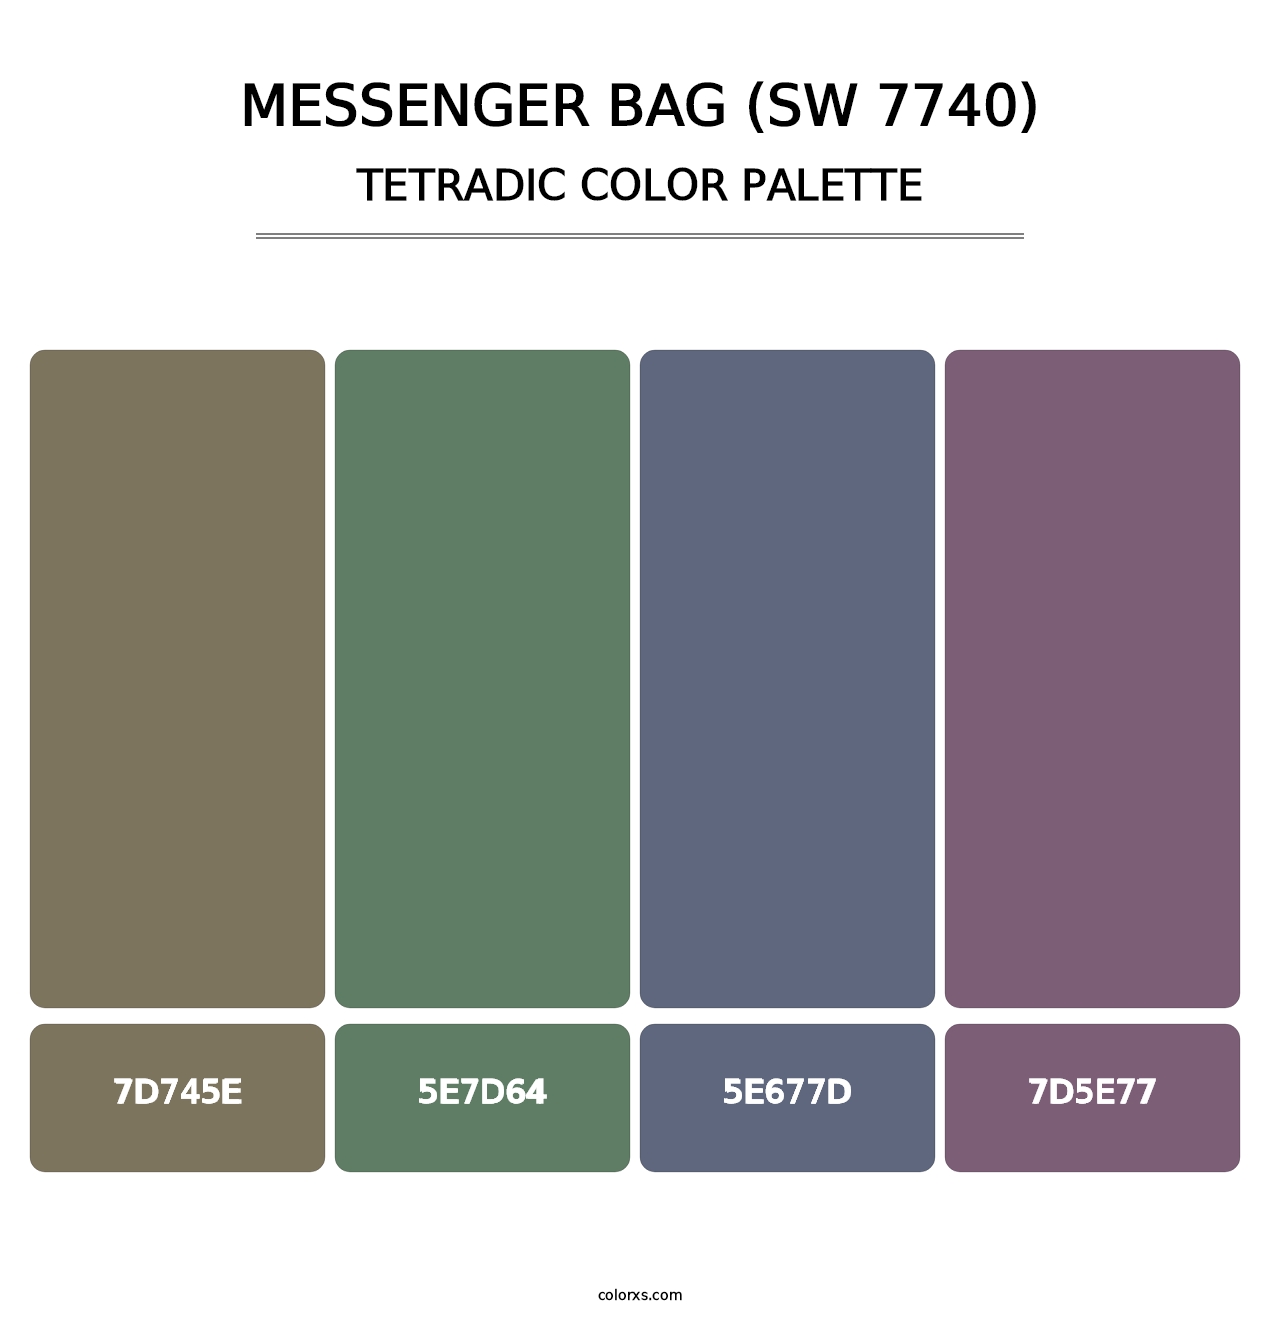 Messenger Bag (SW 7740) - Tetradic Color Palette